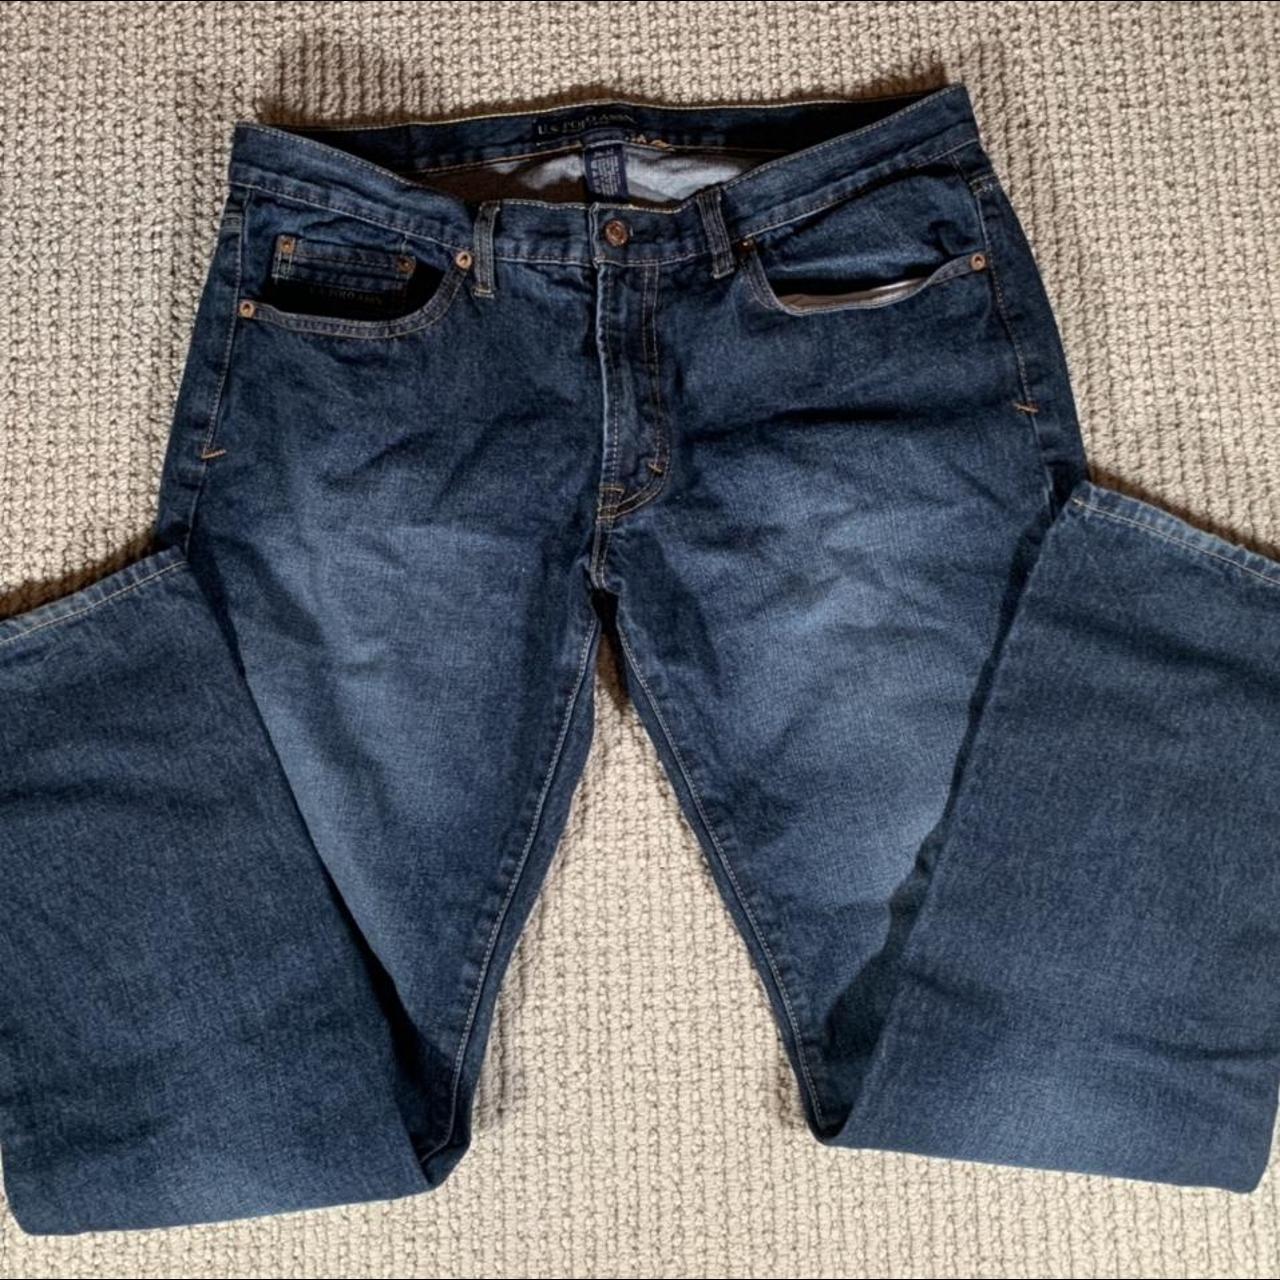 Product Image 2 - Men's US Polo Assn.Blue Jeans